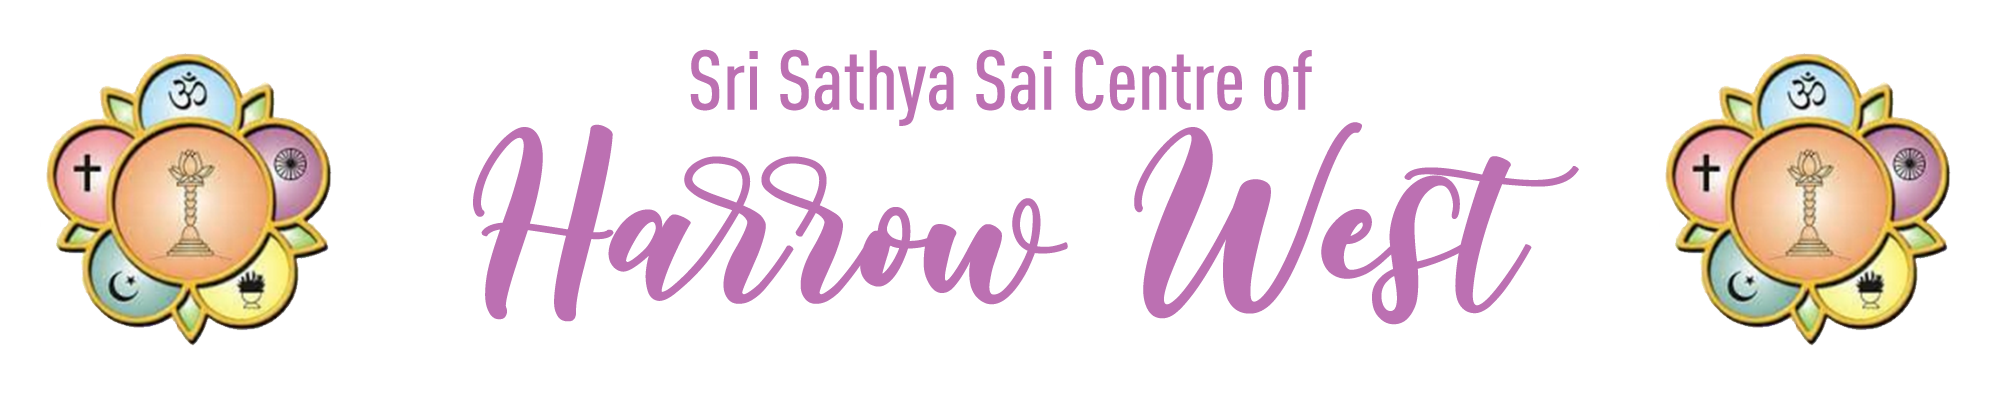 Sri Sathya Sai Centre of Harrow West